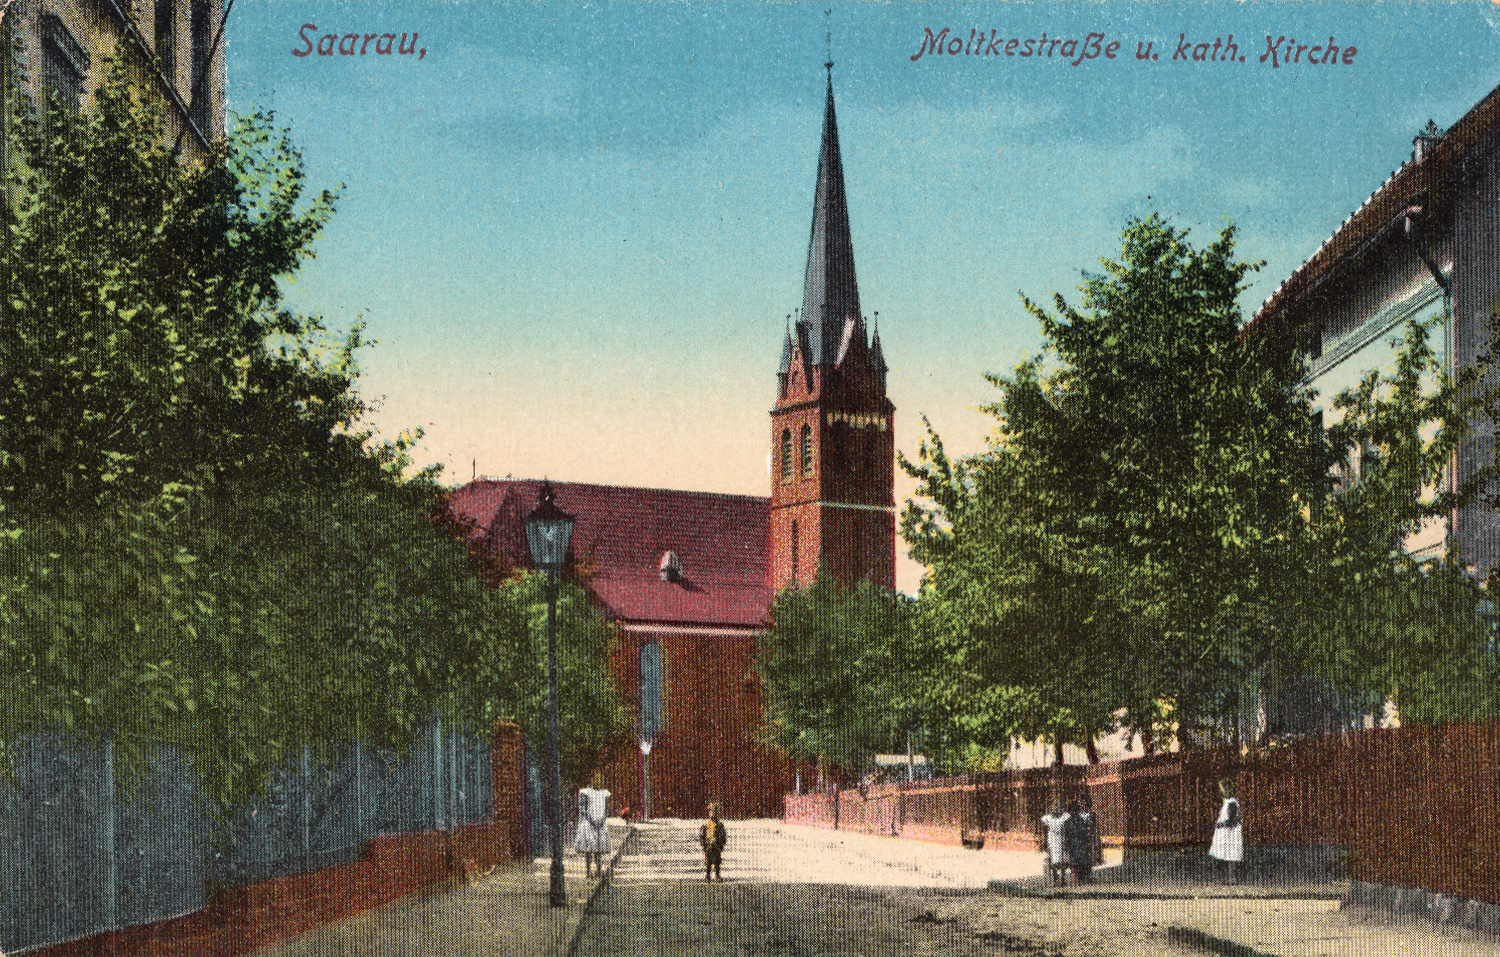 Moltkestrasse u. kath. Kirche Saarau ok. 1920 (1)